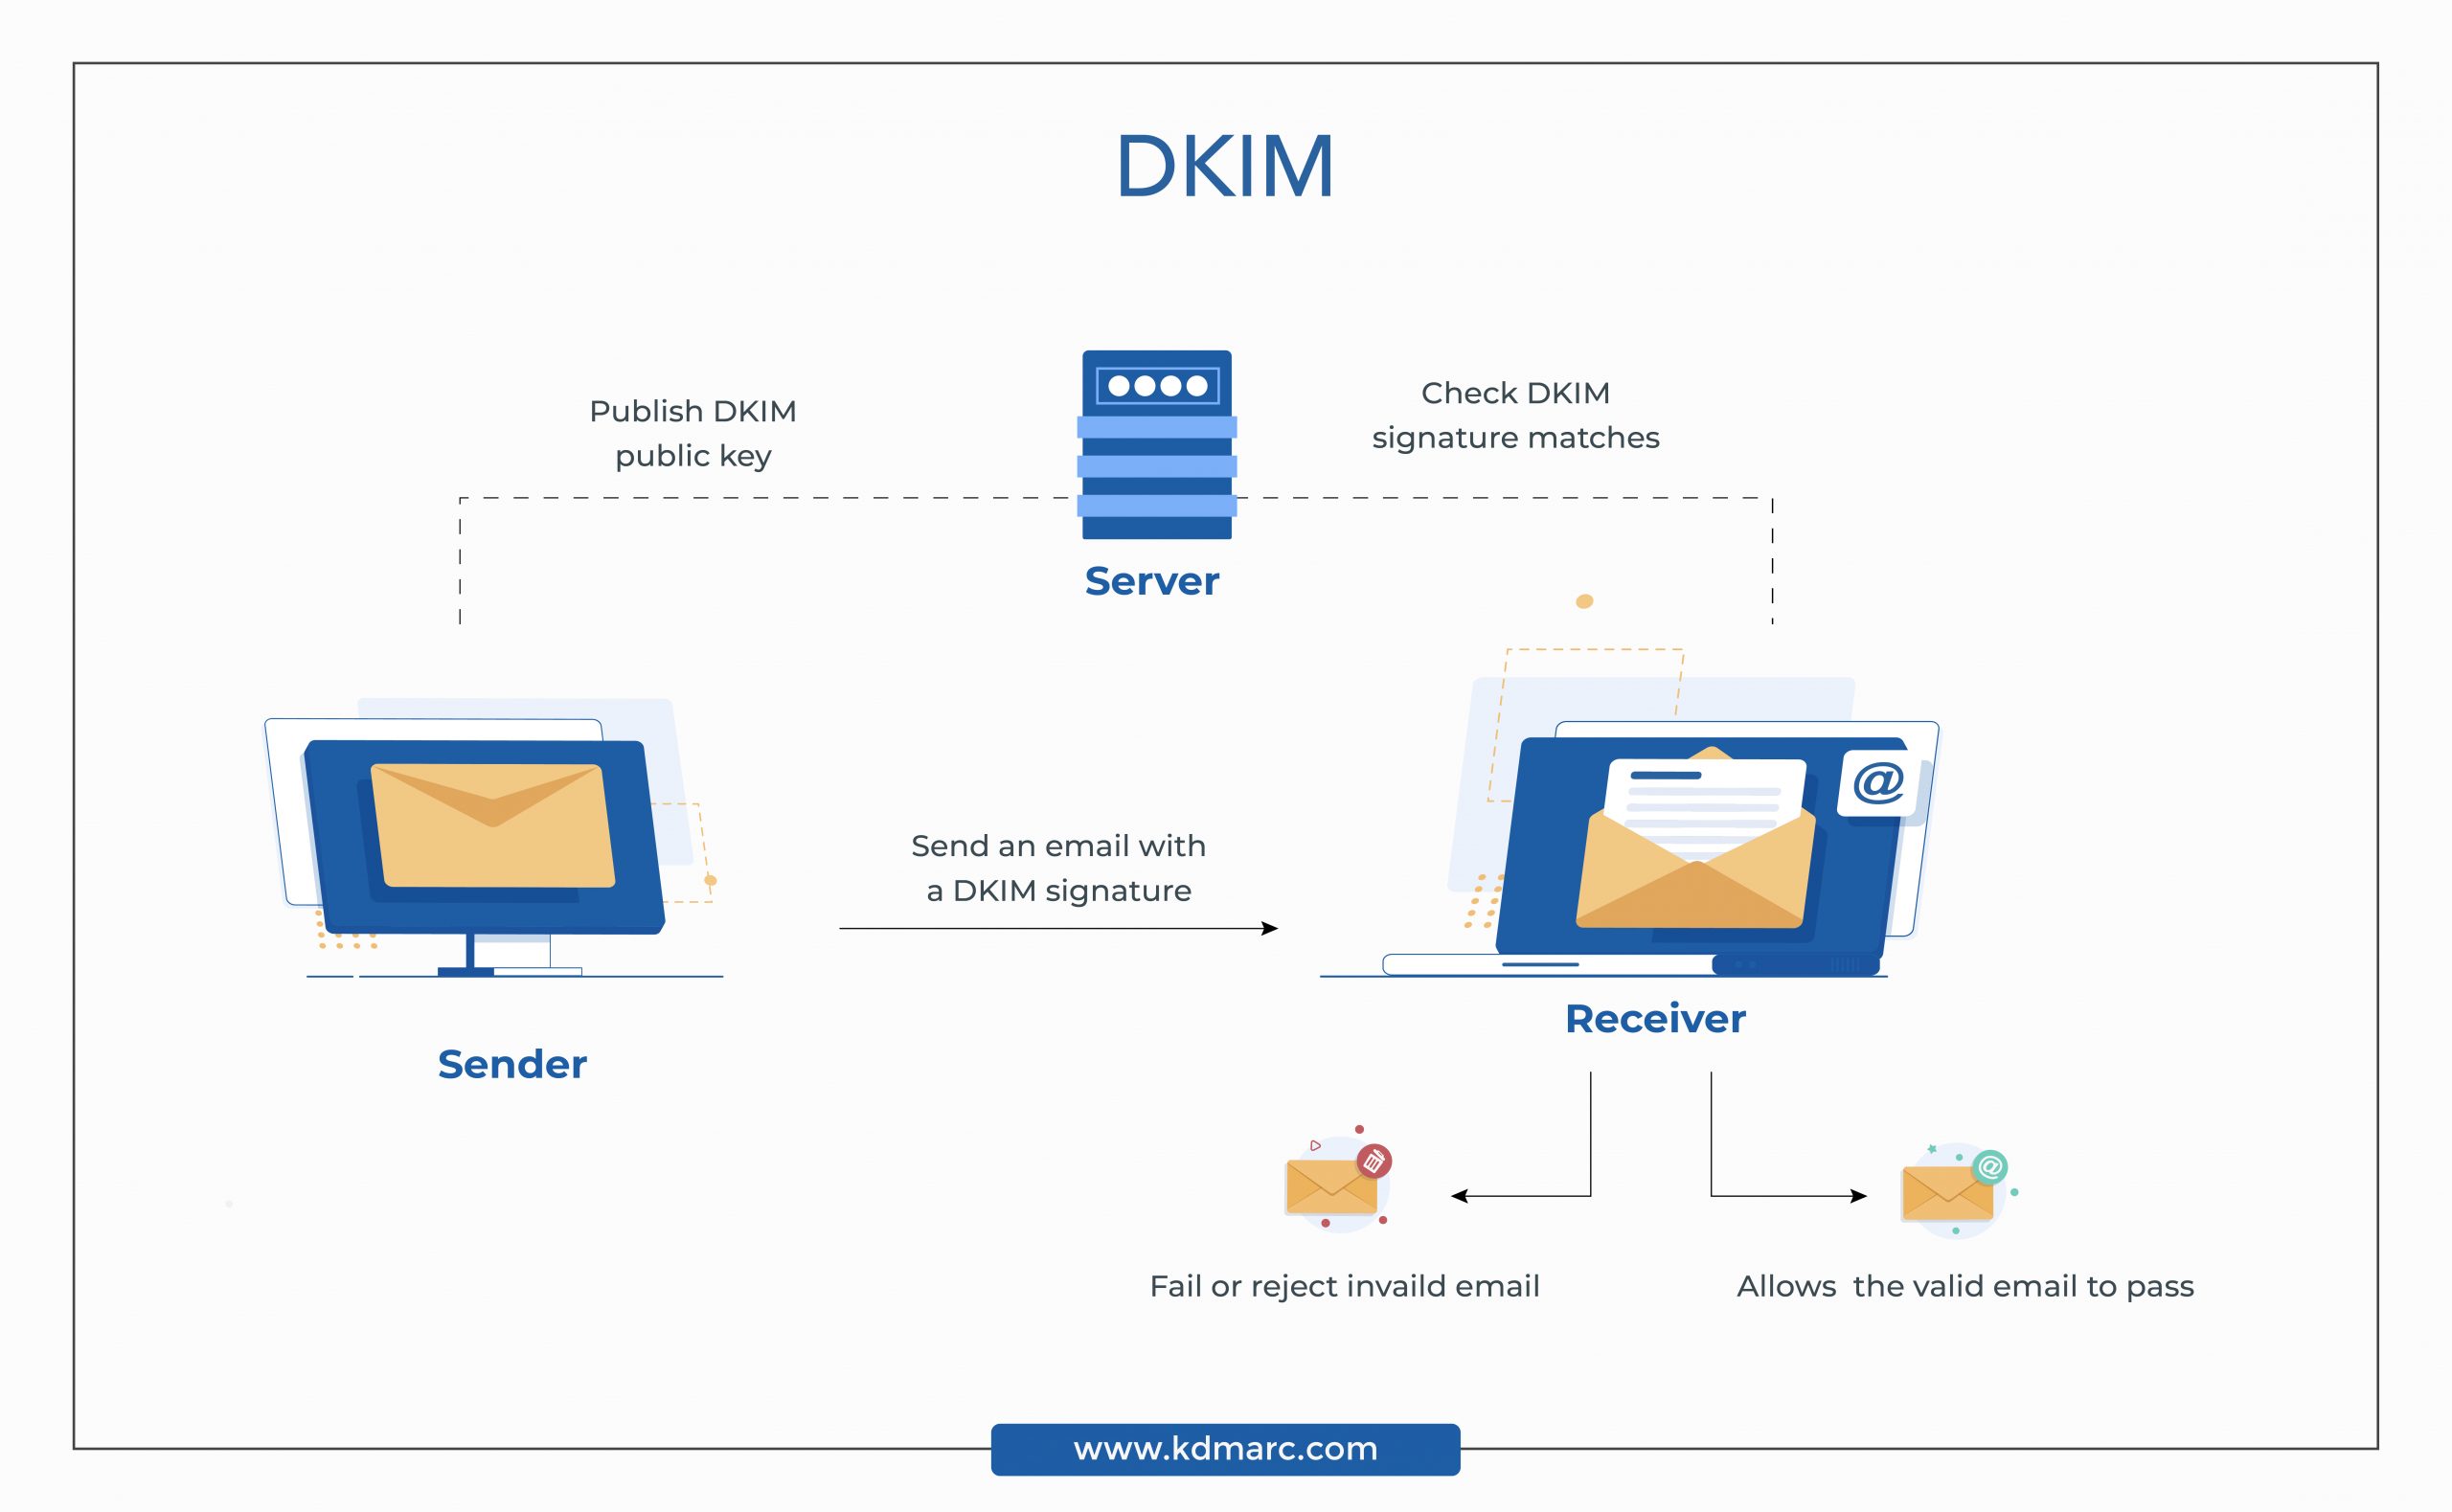 How DKIM Validates Emails